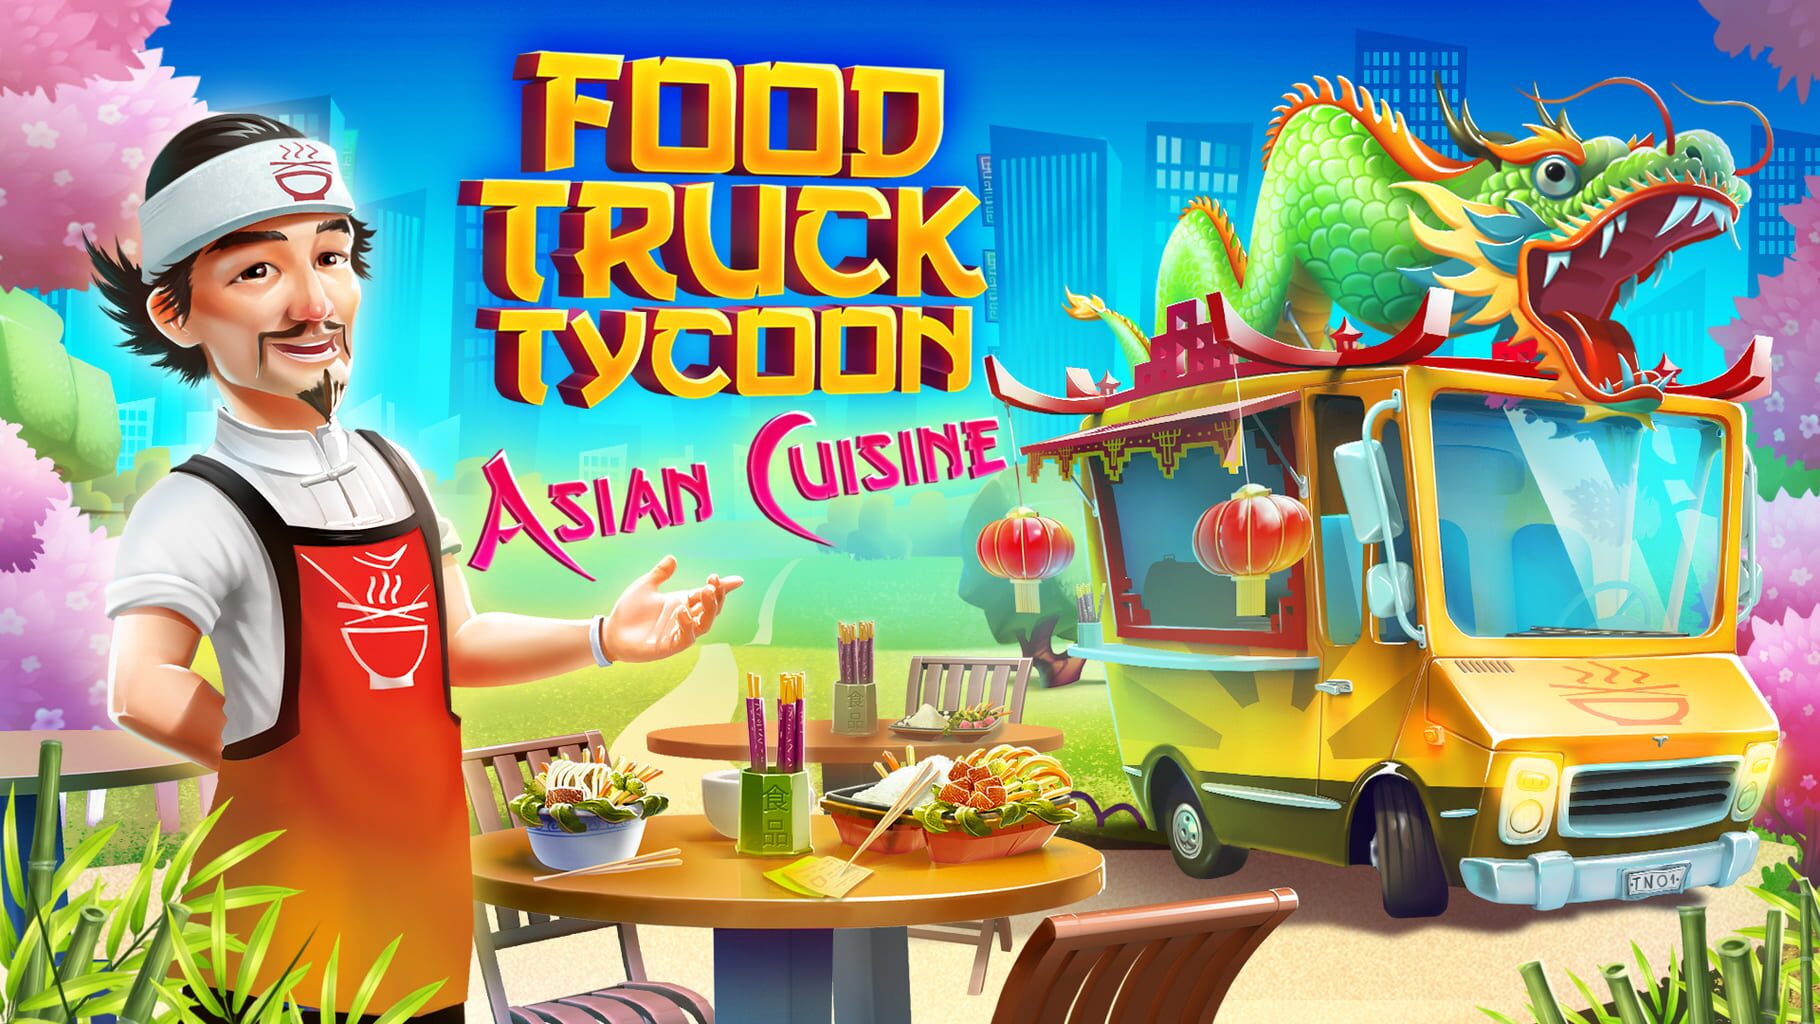 Food Truck Tycoon: Asian Cuisine artwork